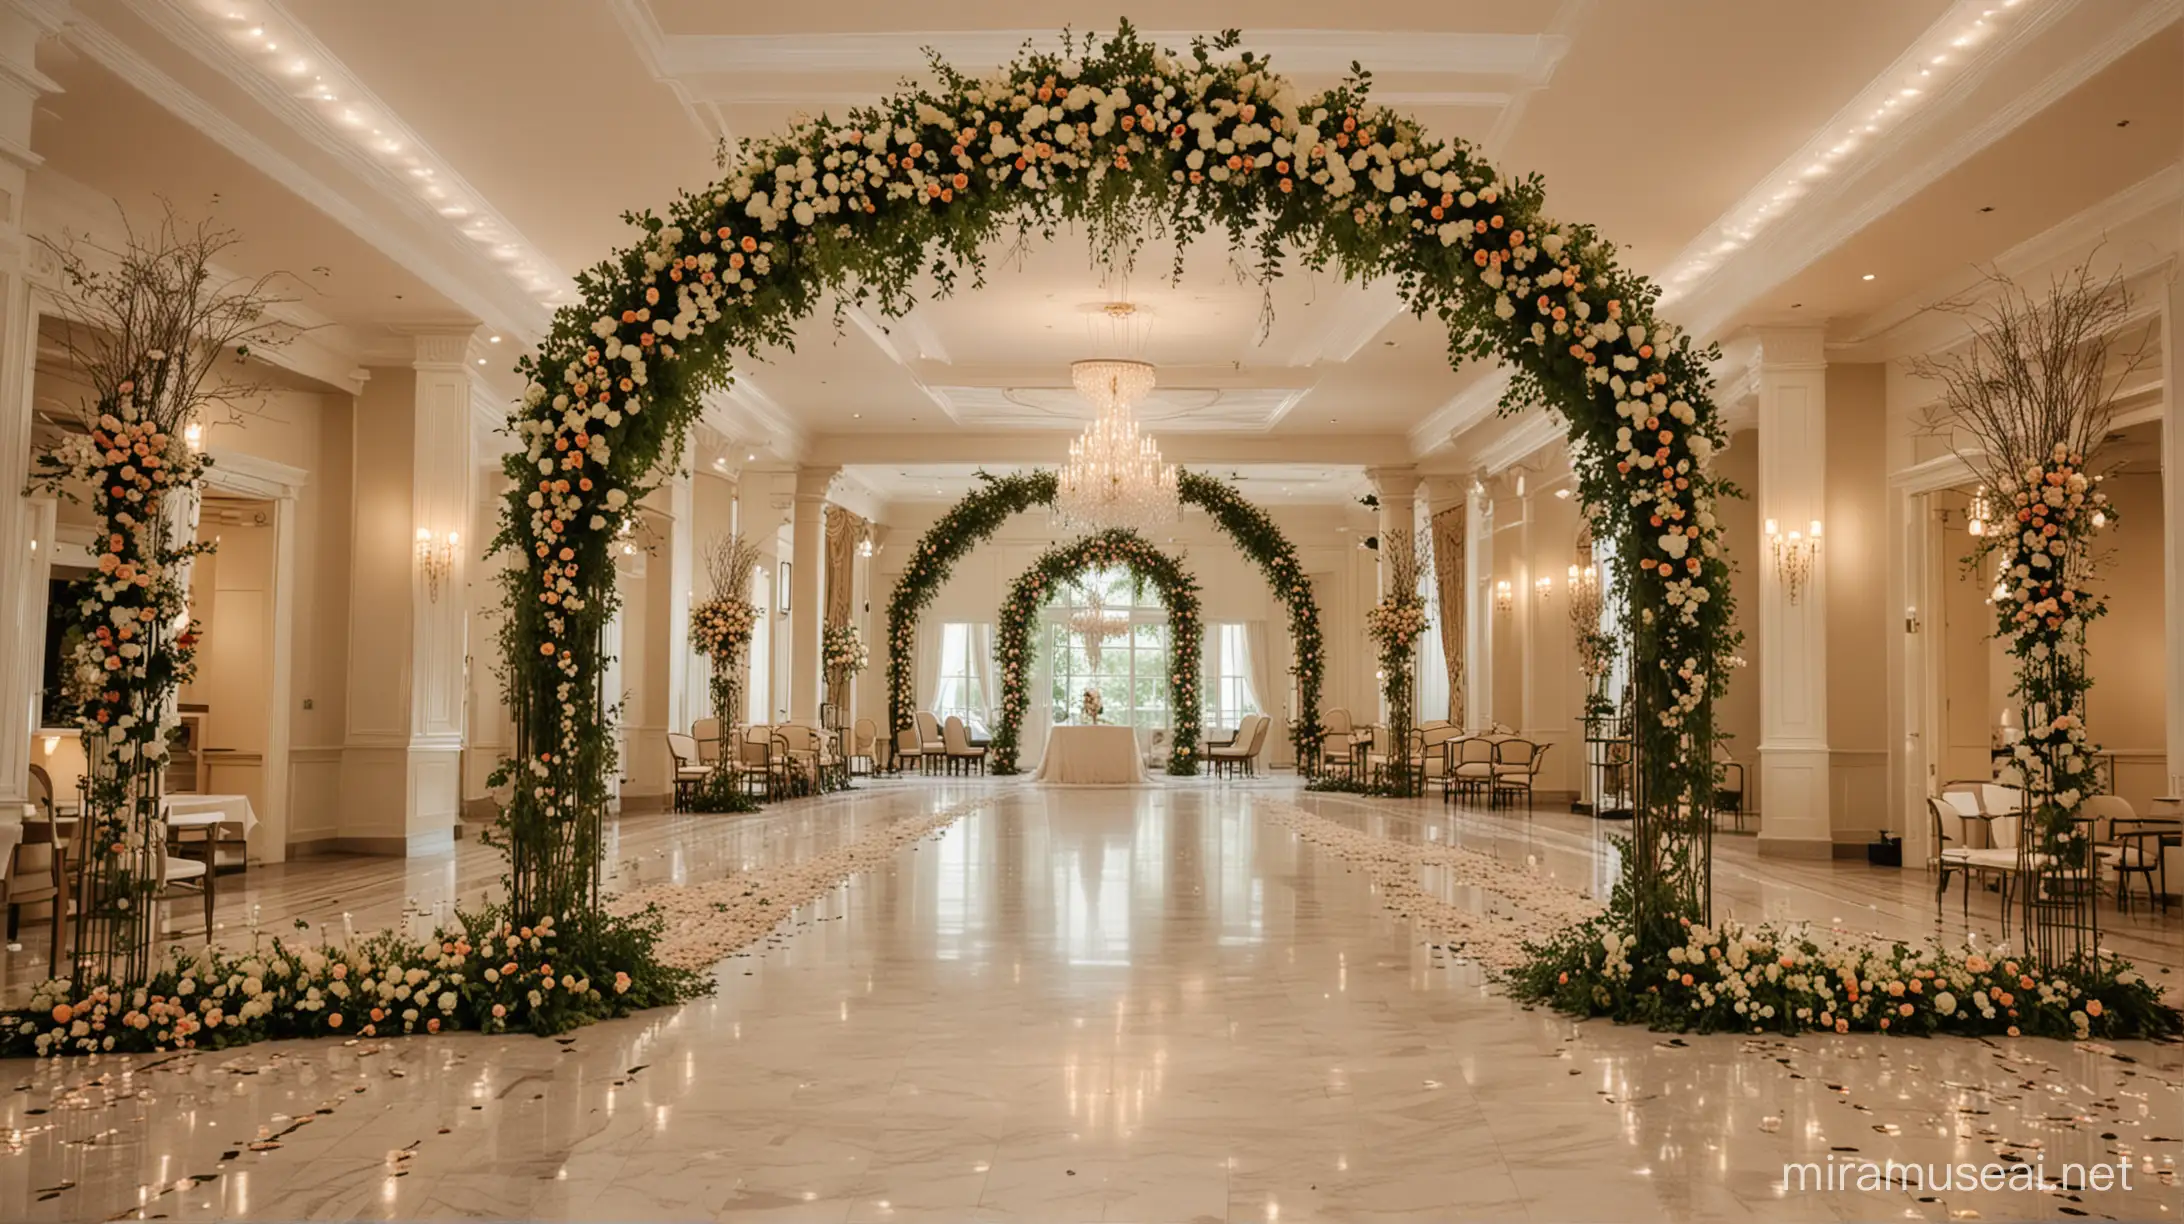 inside grand hotel lobby with wedding arbor of flowers